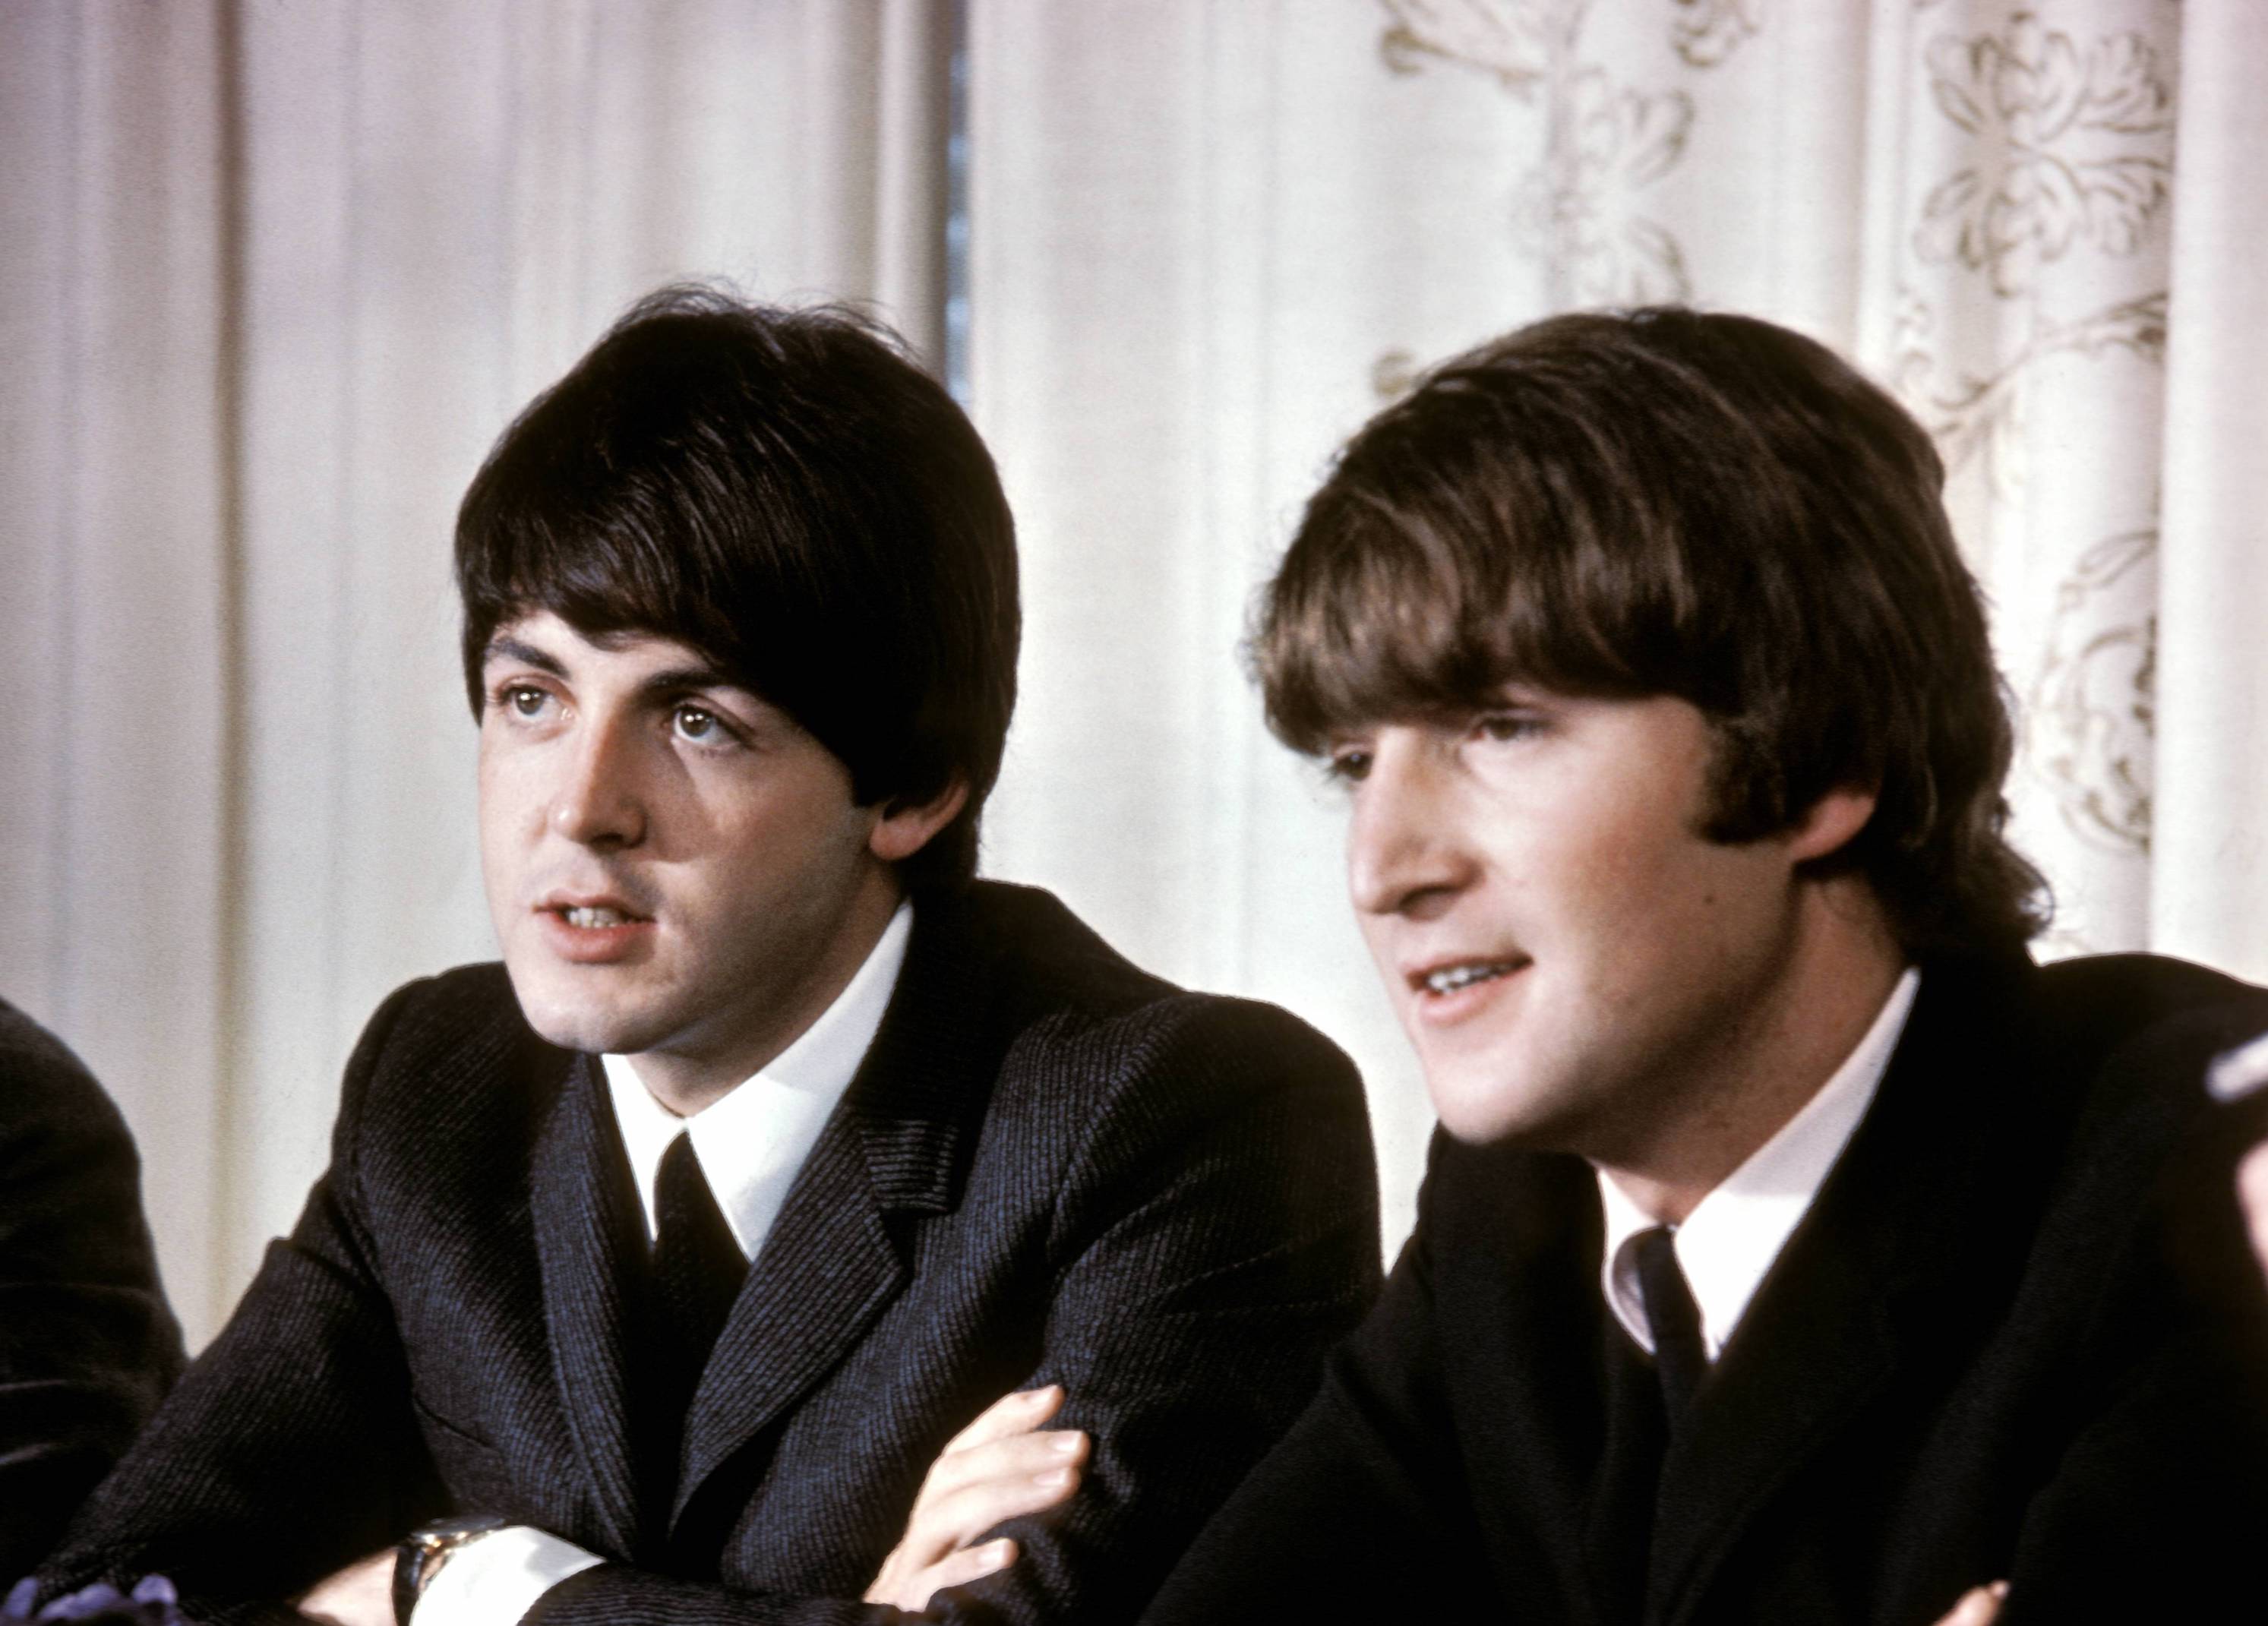 Paul McCartney Says He’s Not a ‘Risk-Taker,’ But John Lennon Made Up for it